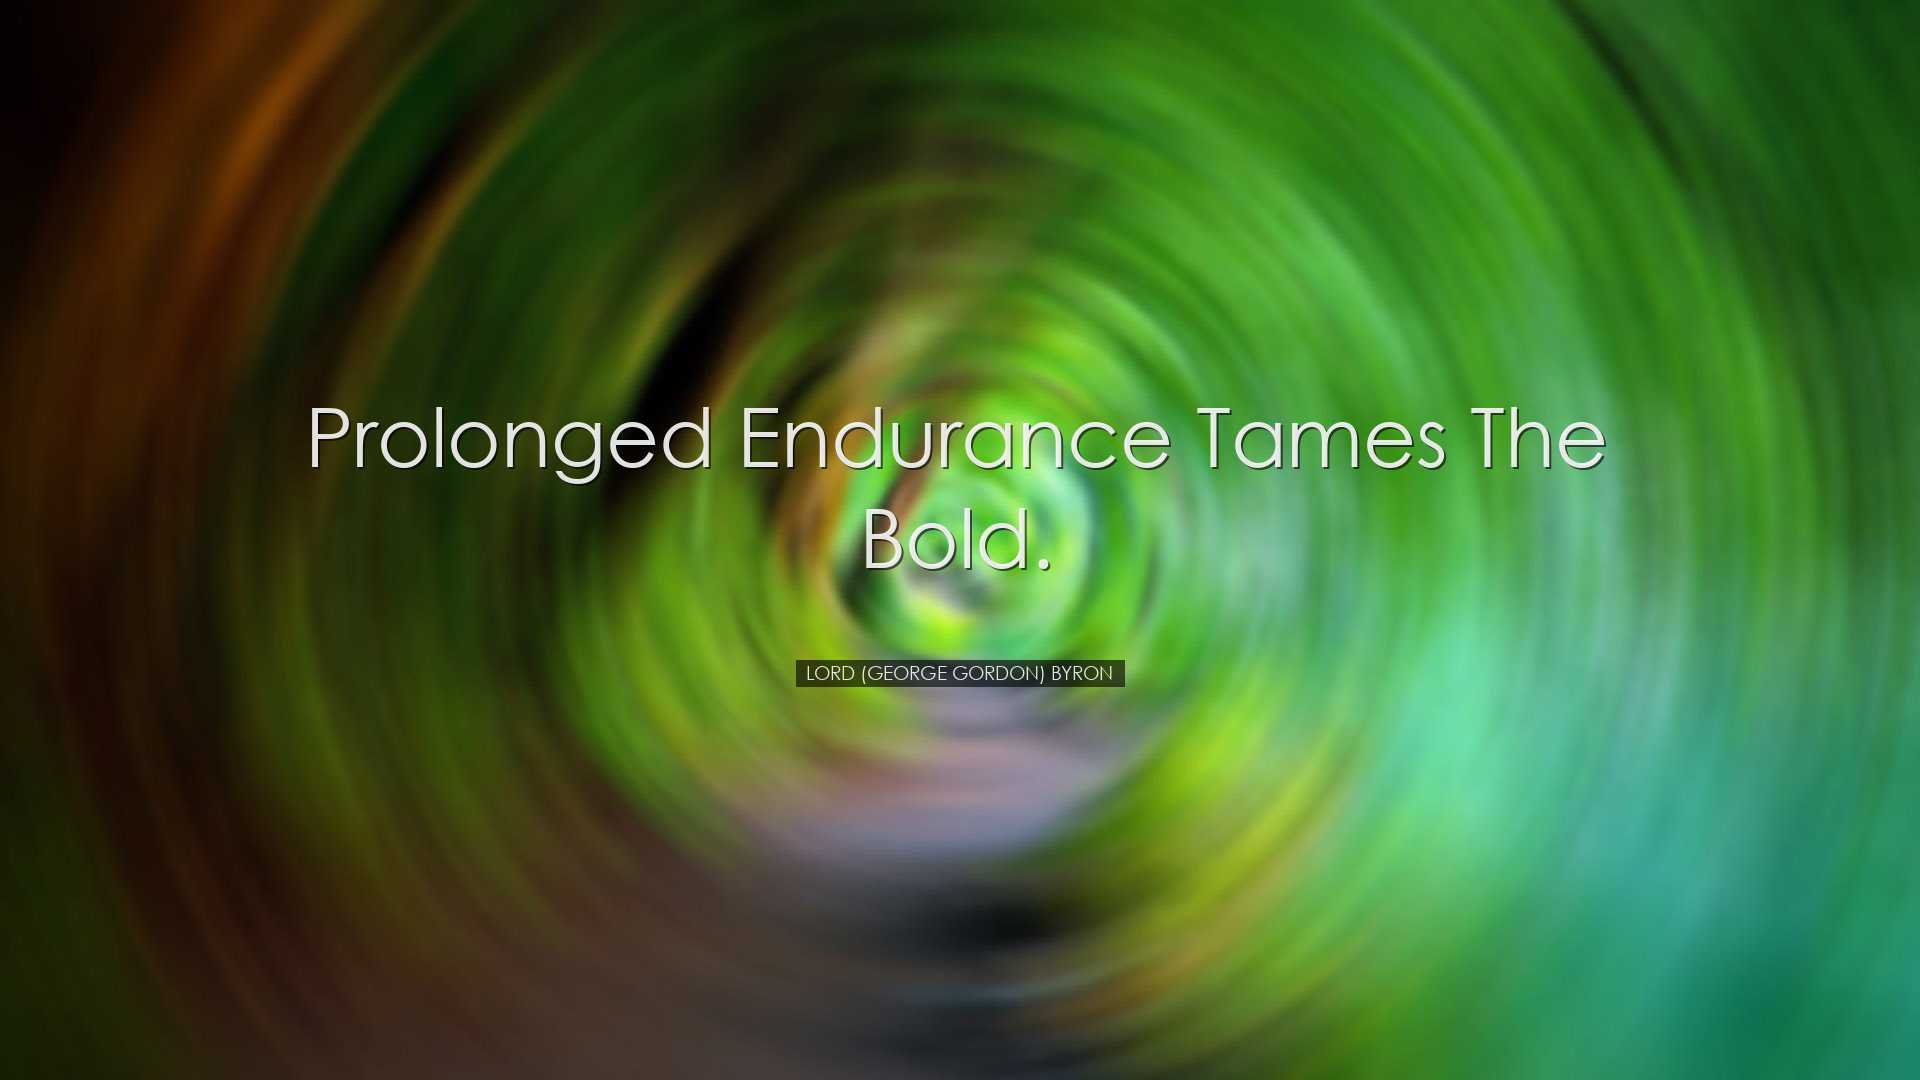 Prolonged endurance tames the bold. - Lord (George Gordon) Byron